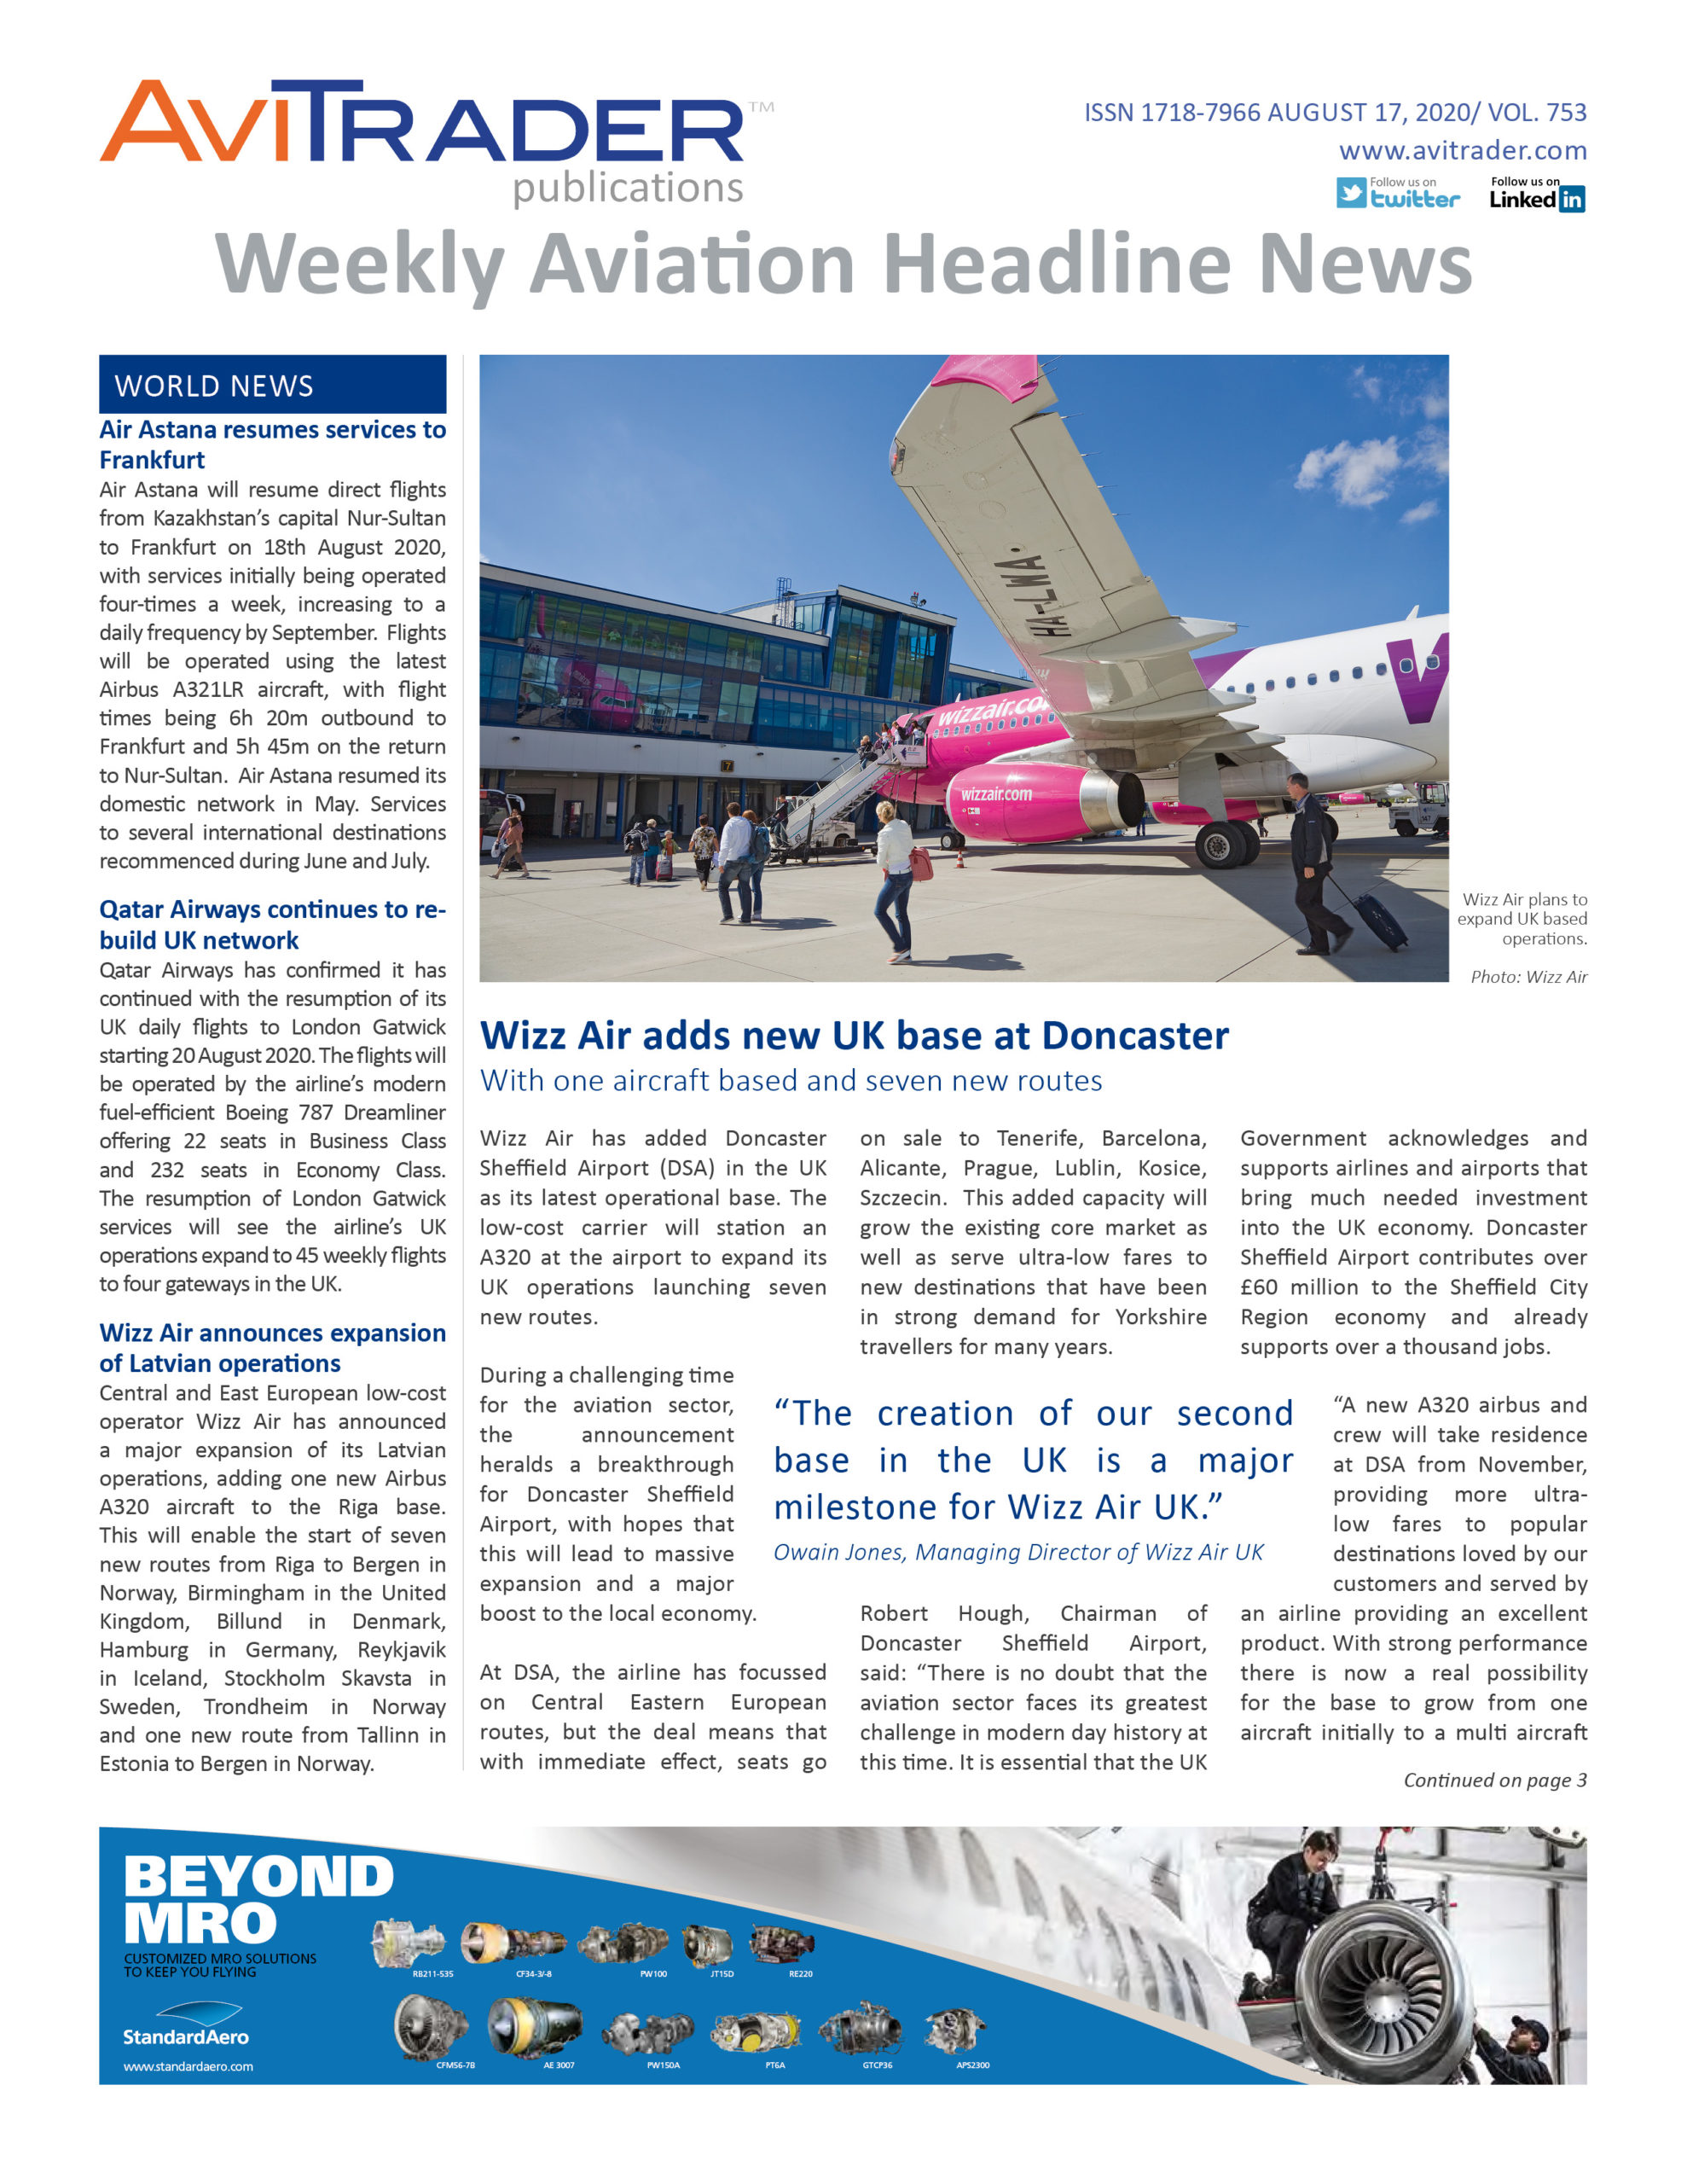 AviTrader_Weekly_Headline_News_Cover_2020-08-17